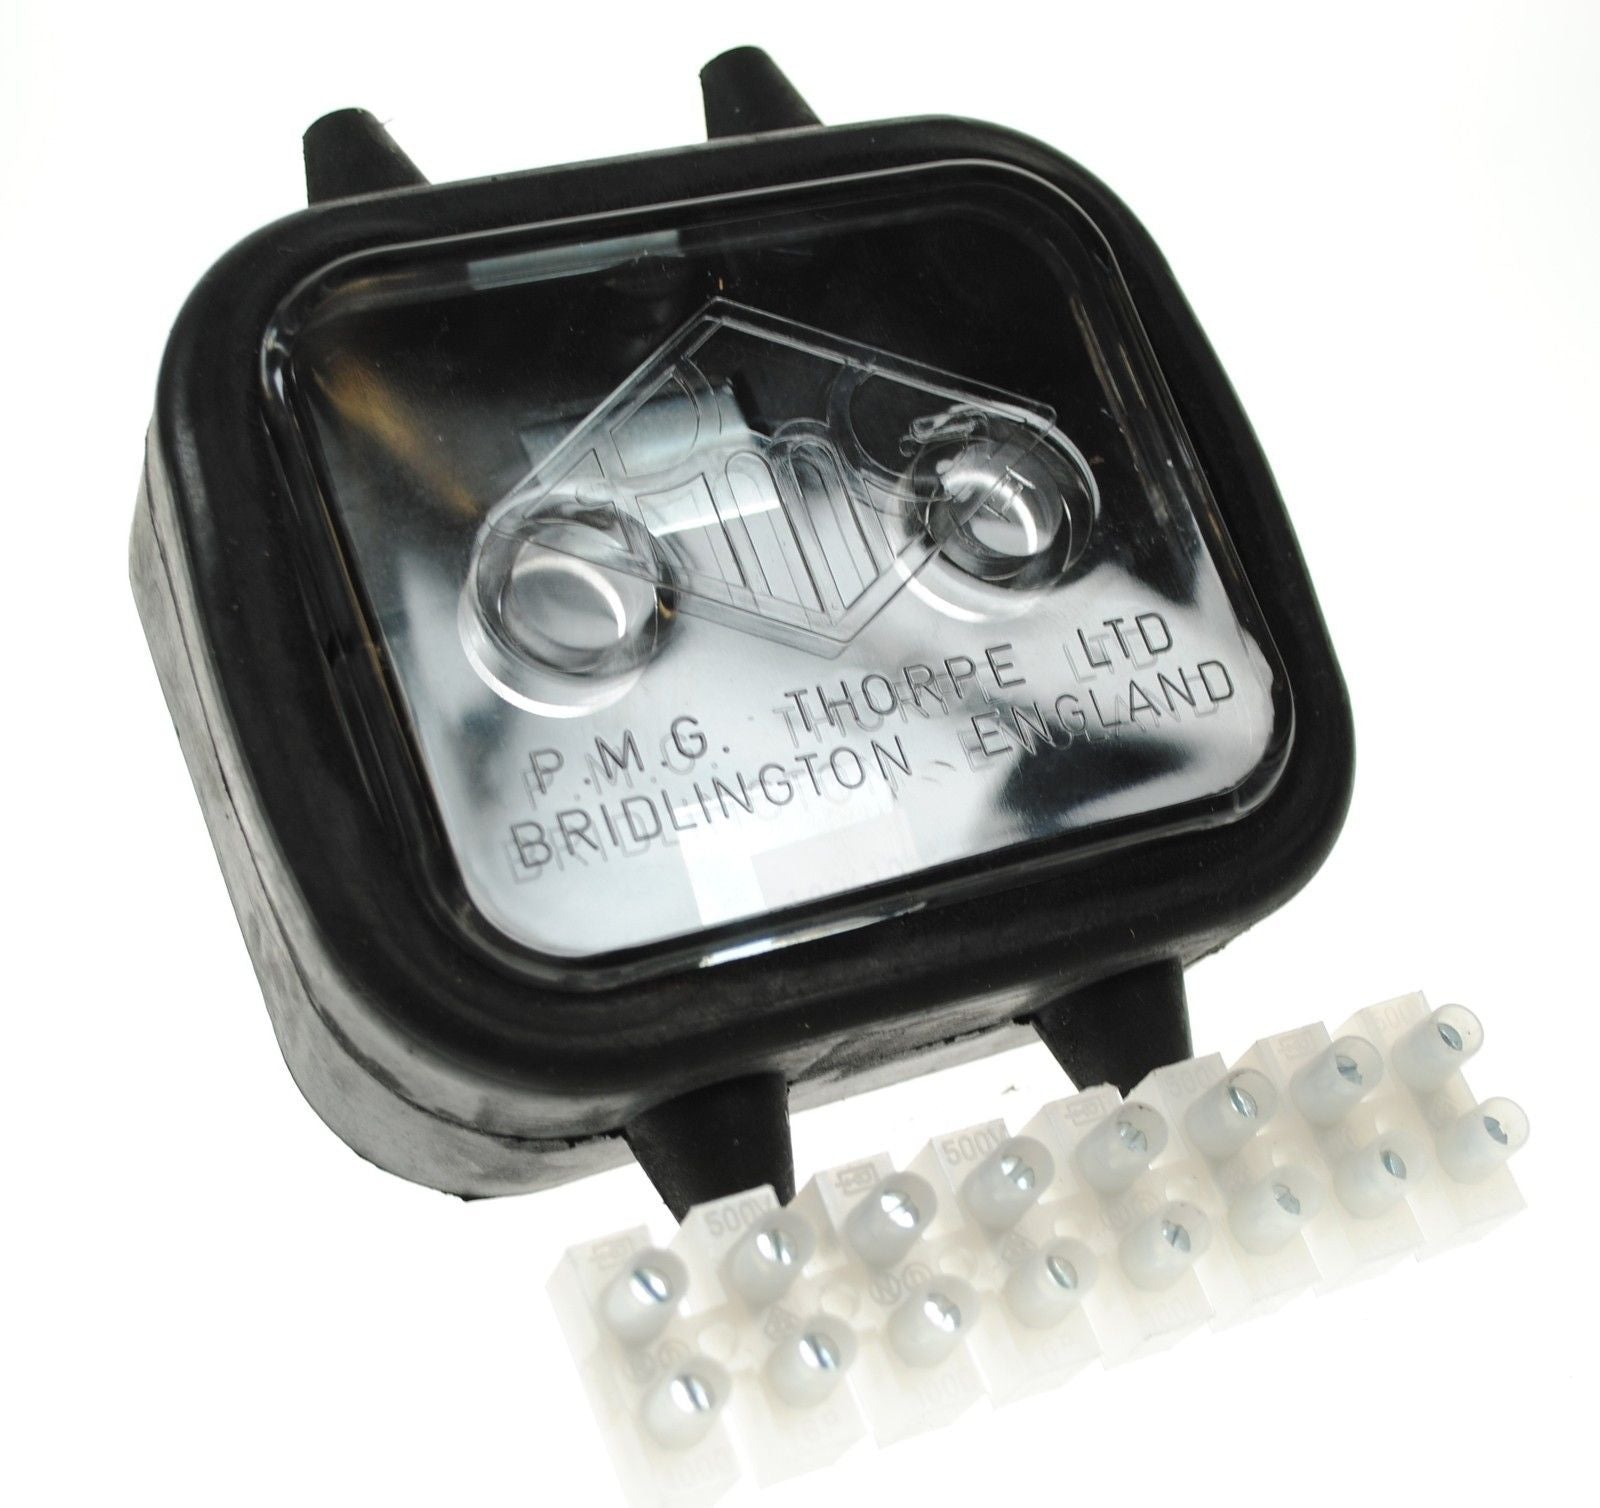 Britax gummikoblingsboks med skruekontakter / 8-vejs - sikringer og sikringsholdere - spo-cs-deaktiveret - spo-default - spo-ena